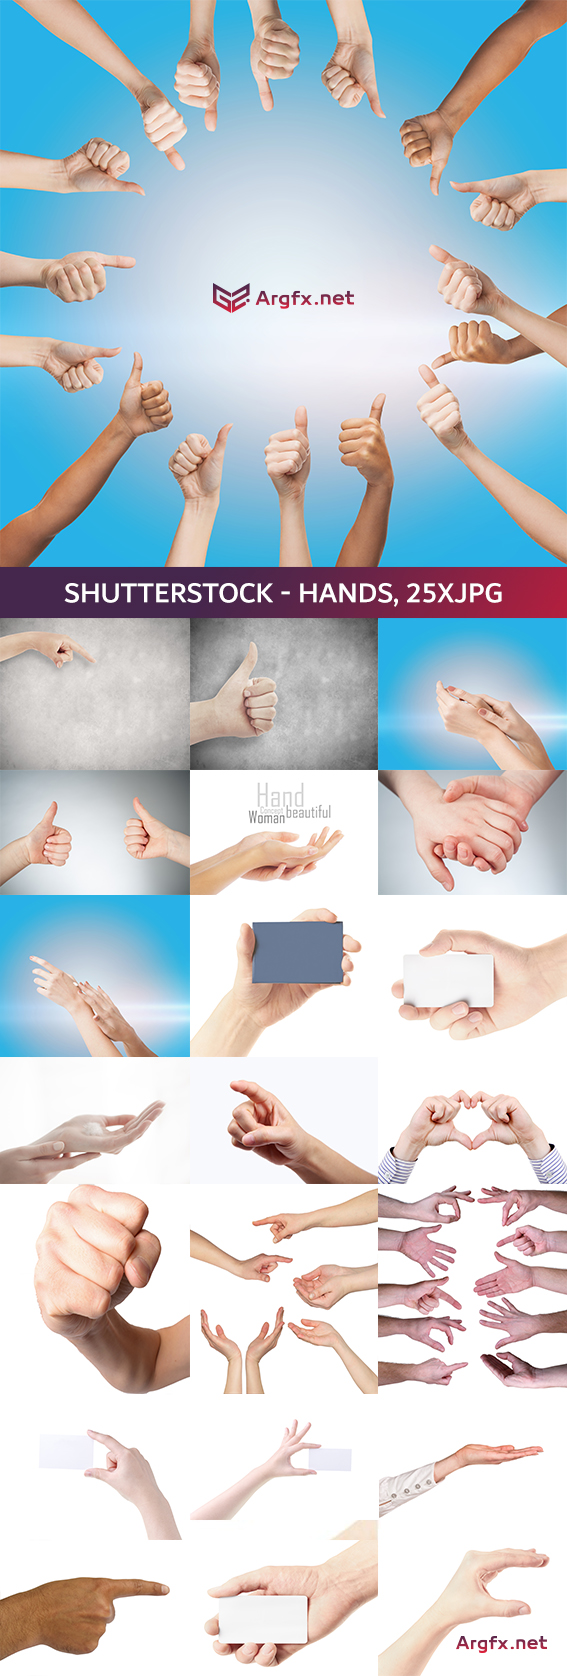 Shutterstock - Hands, 25xJpg